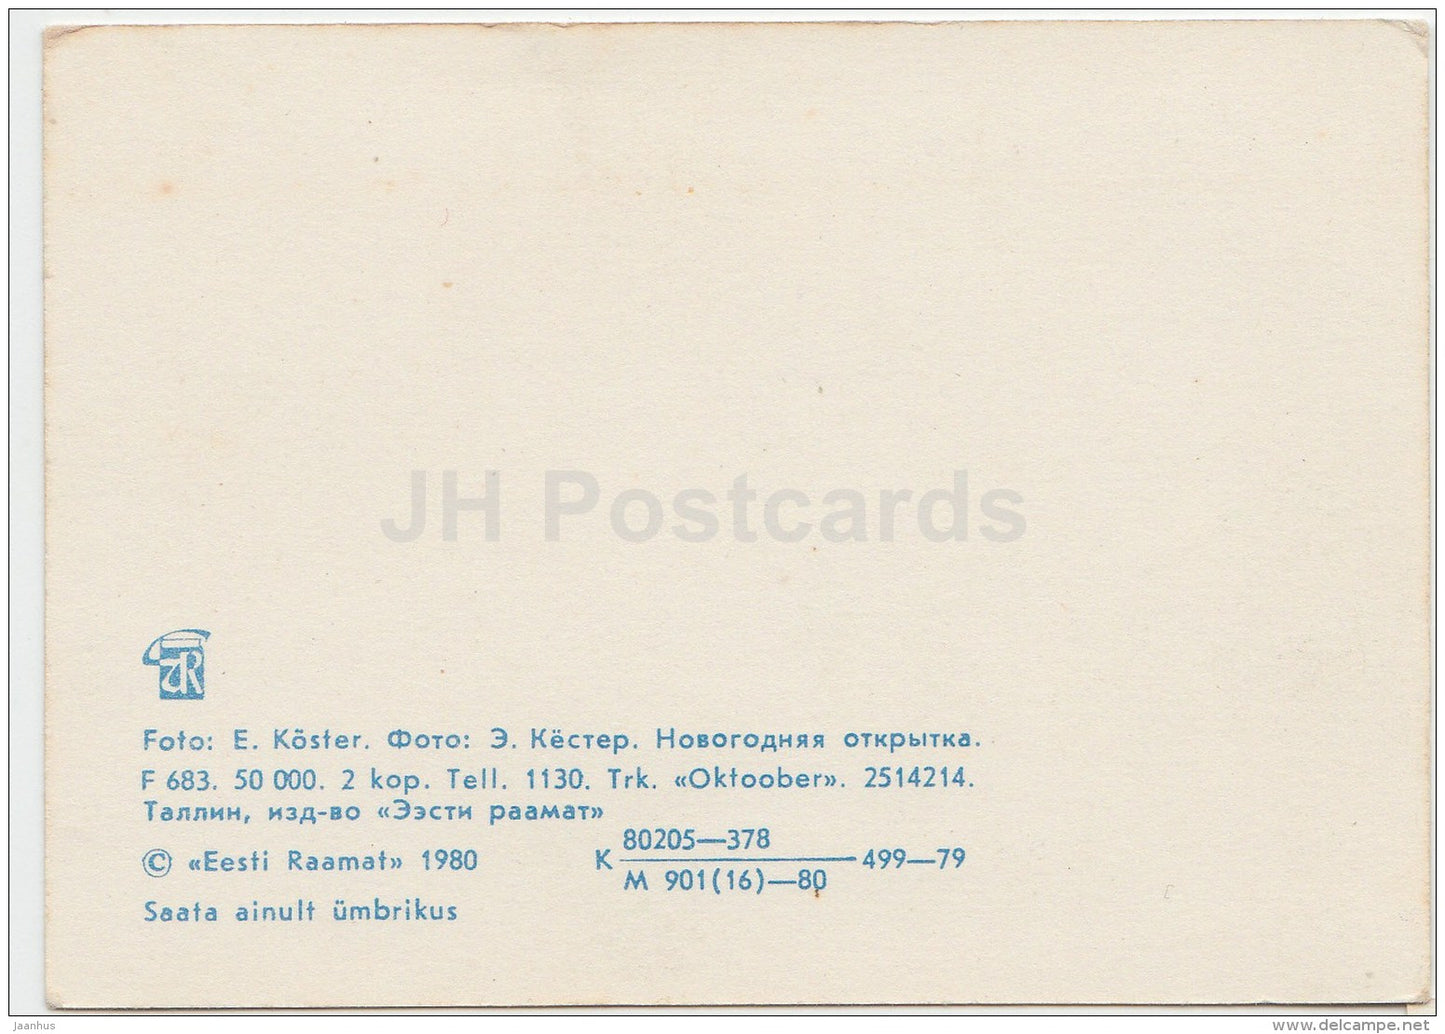 mini New Year greeting card - snow town - 1980 - Estonia USSR - unused - JH Postcards